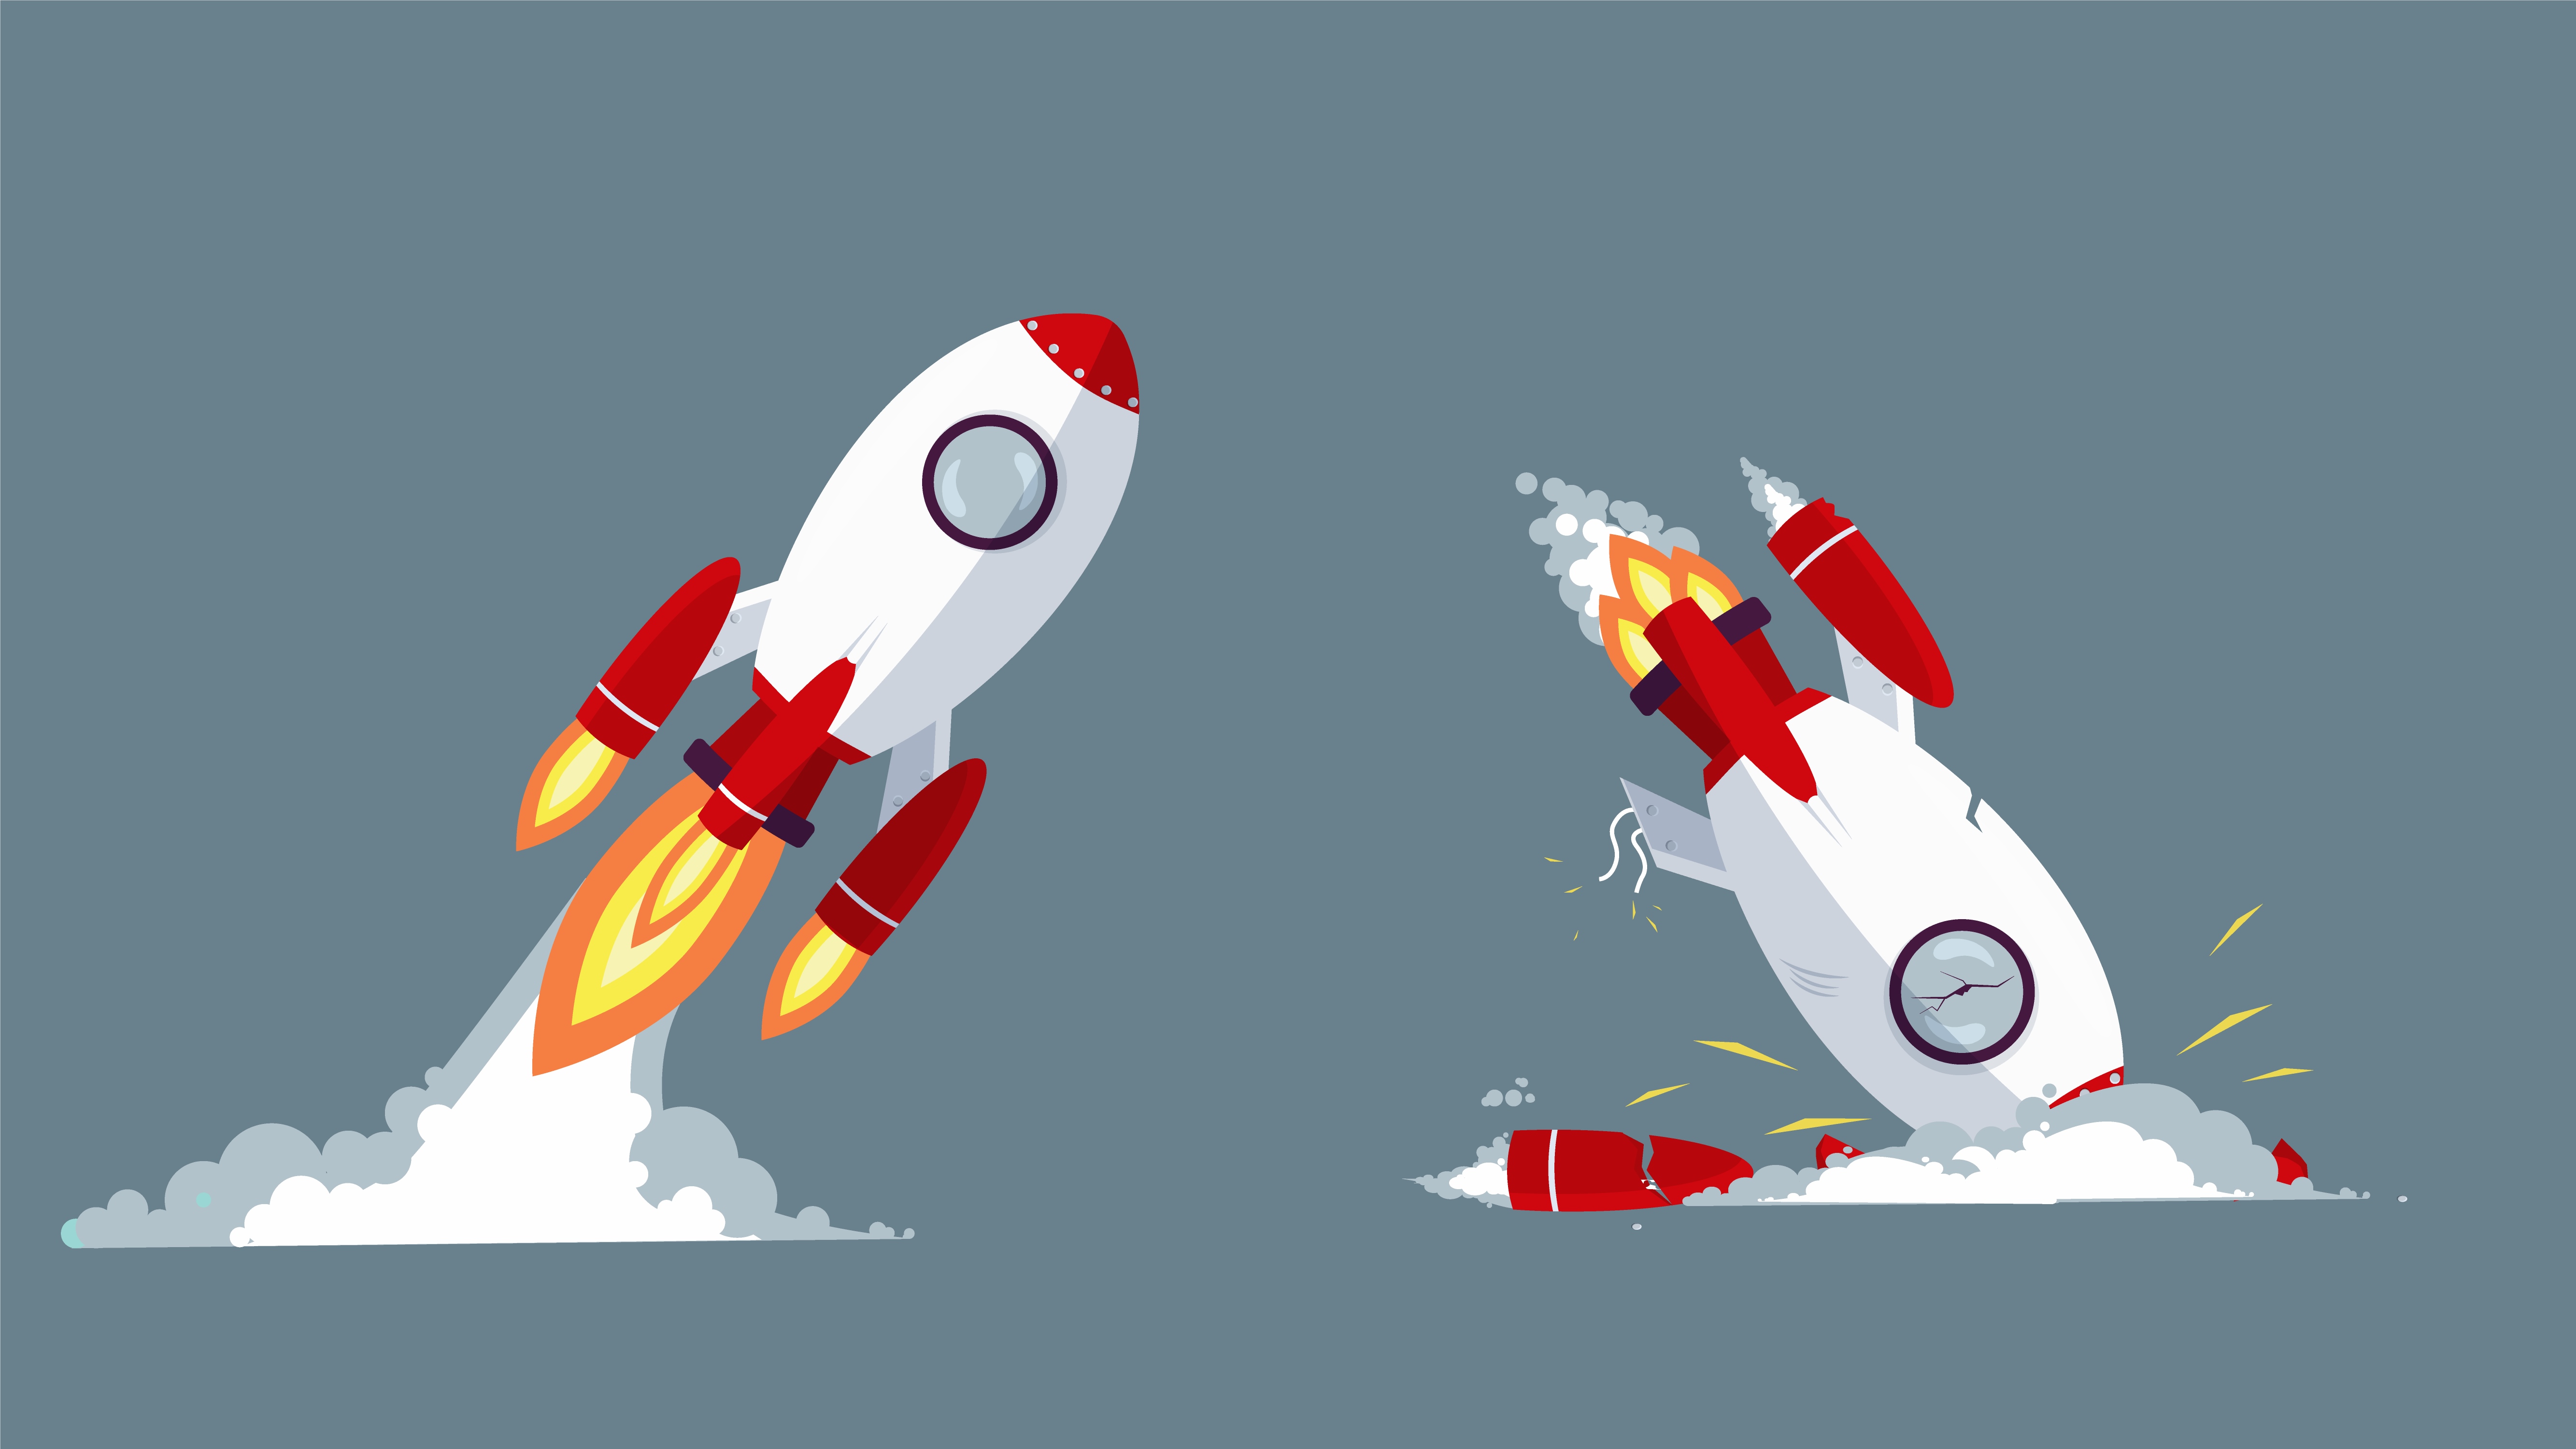 Cartoon rocket taking off and crash vector graphic illustration. 